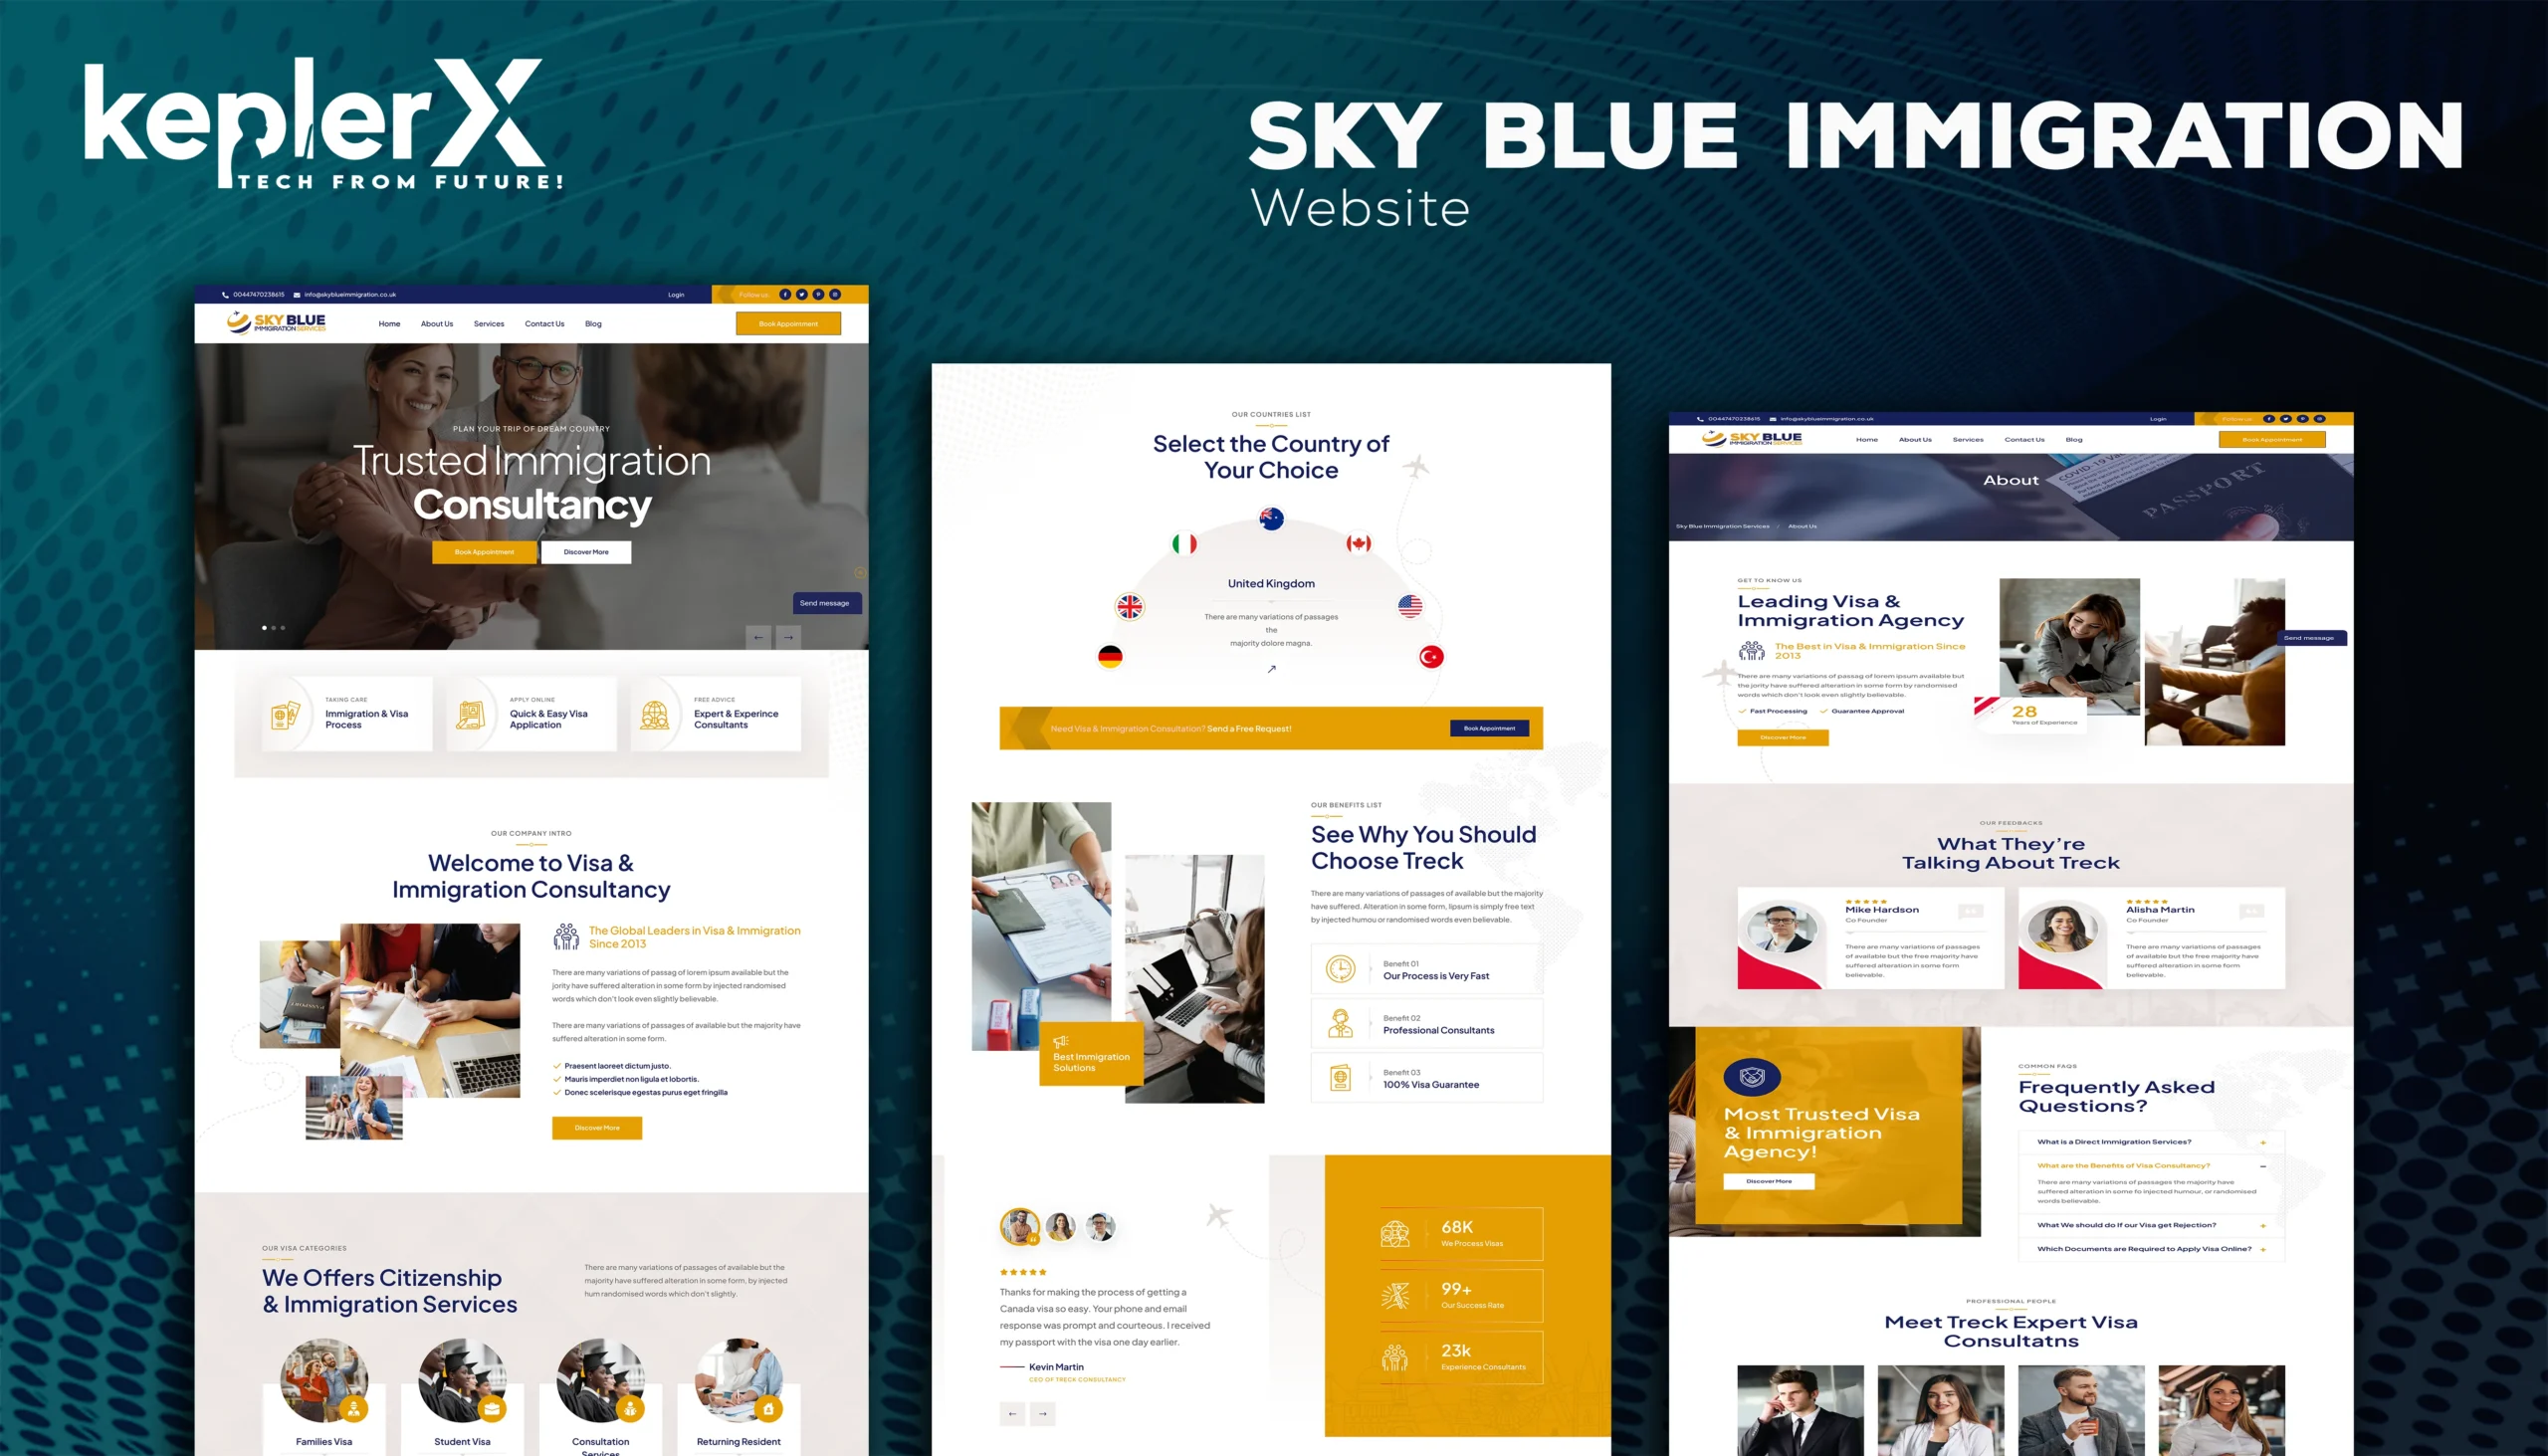 Sky Blue Immigration